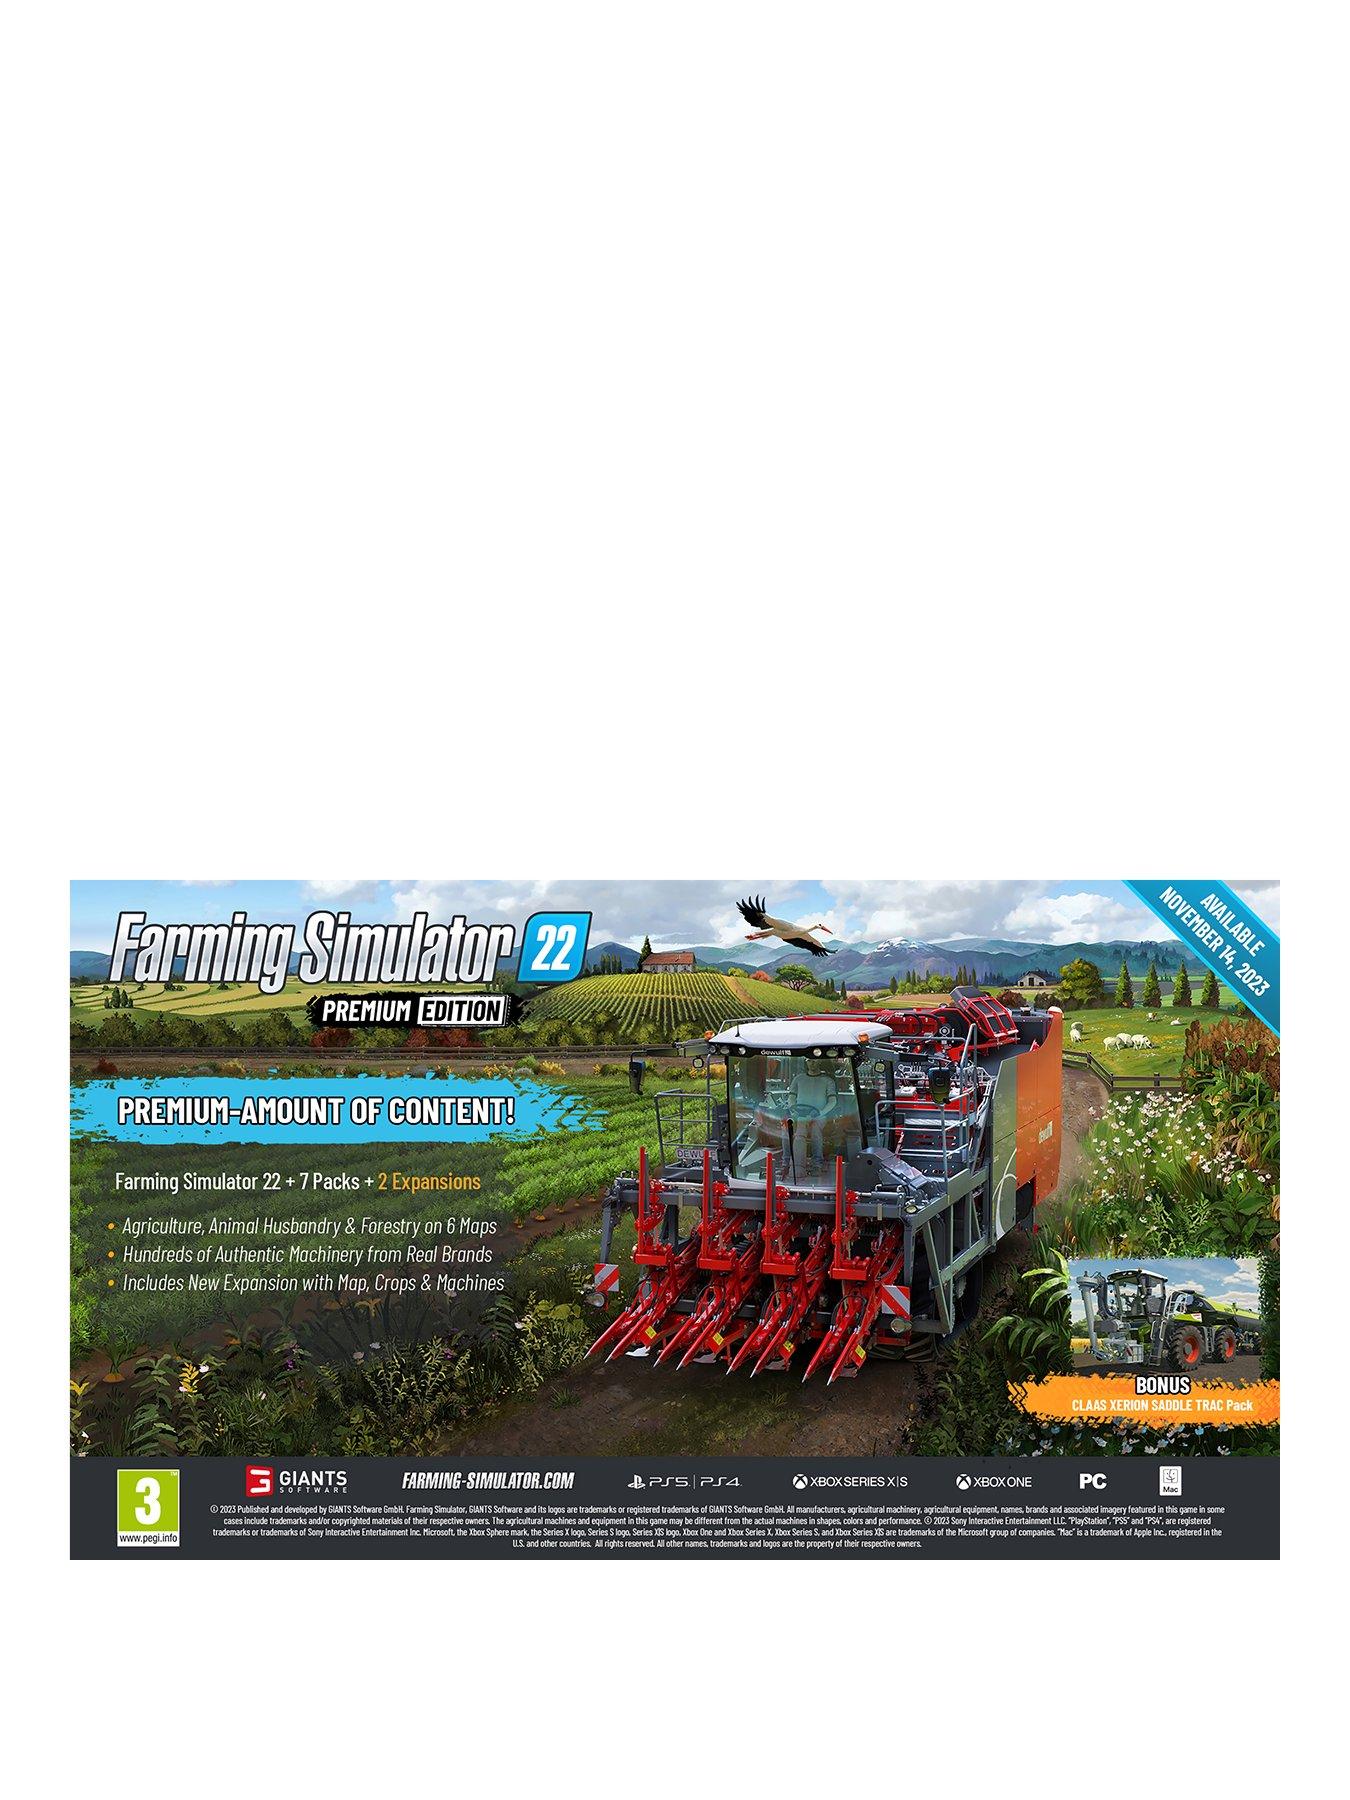 Playstation 4 Farming Simulator 22: Premium Edition